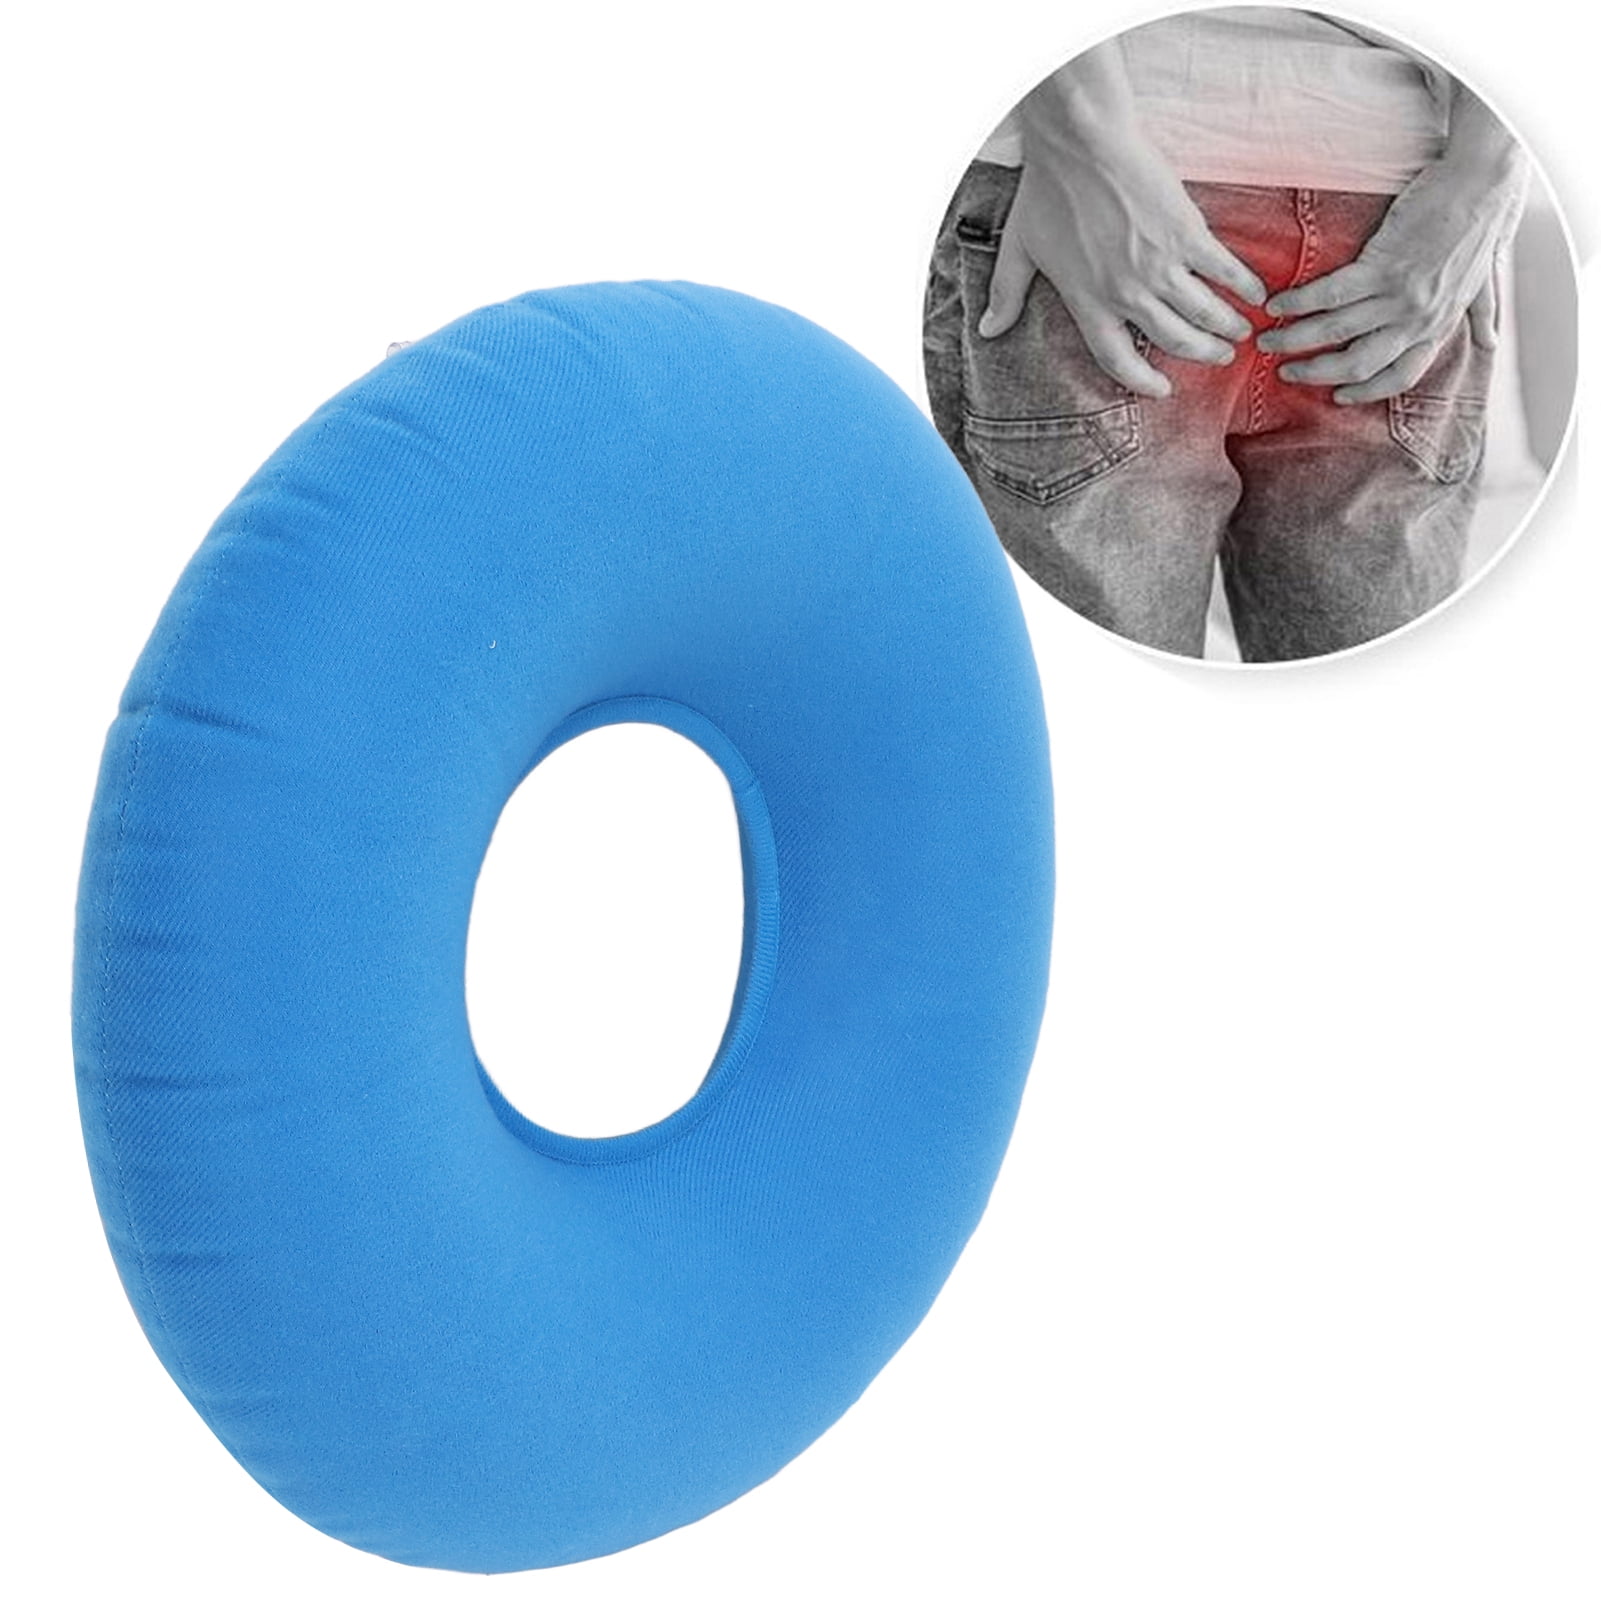 CHOYTONG Elderly Inflatable Ring Cushion - Nursing Pressure Sore Pad for Bedridden, Disabled, Comfort & Breathable for Pressure Relif (Round)